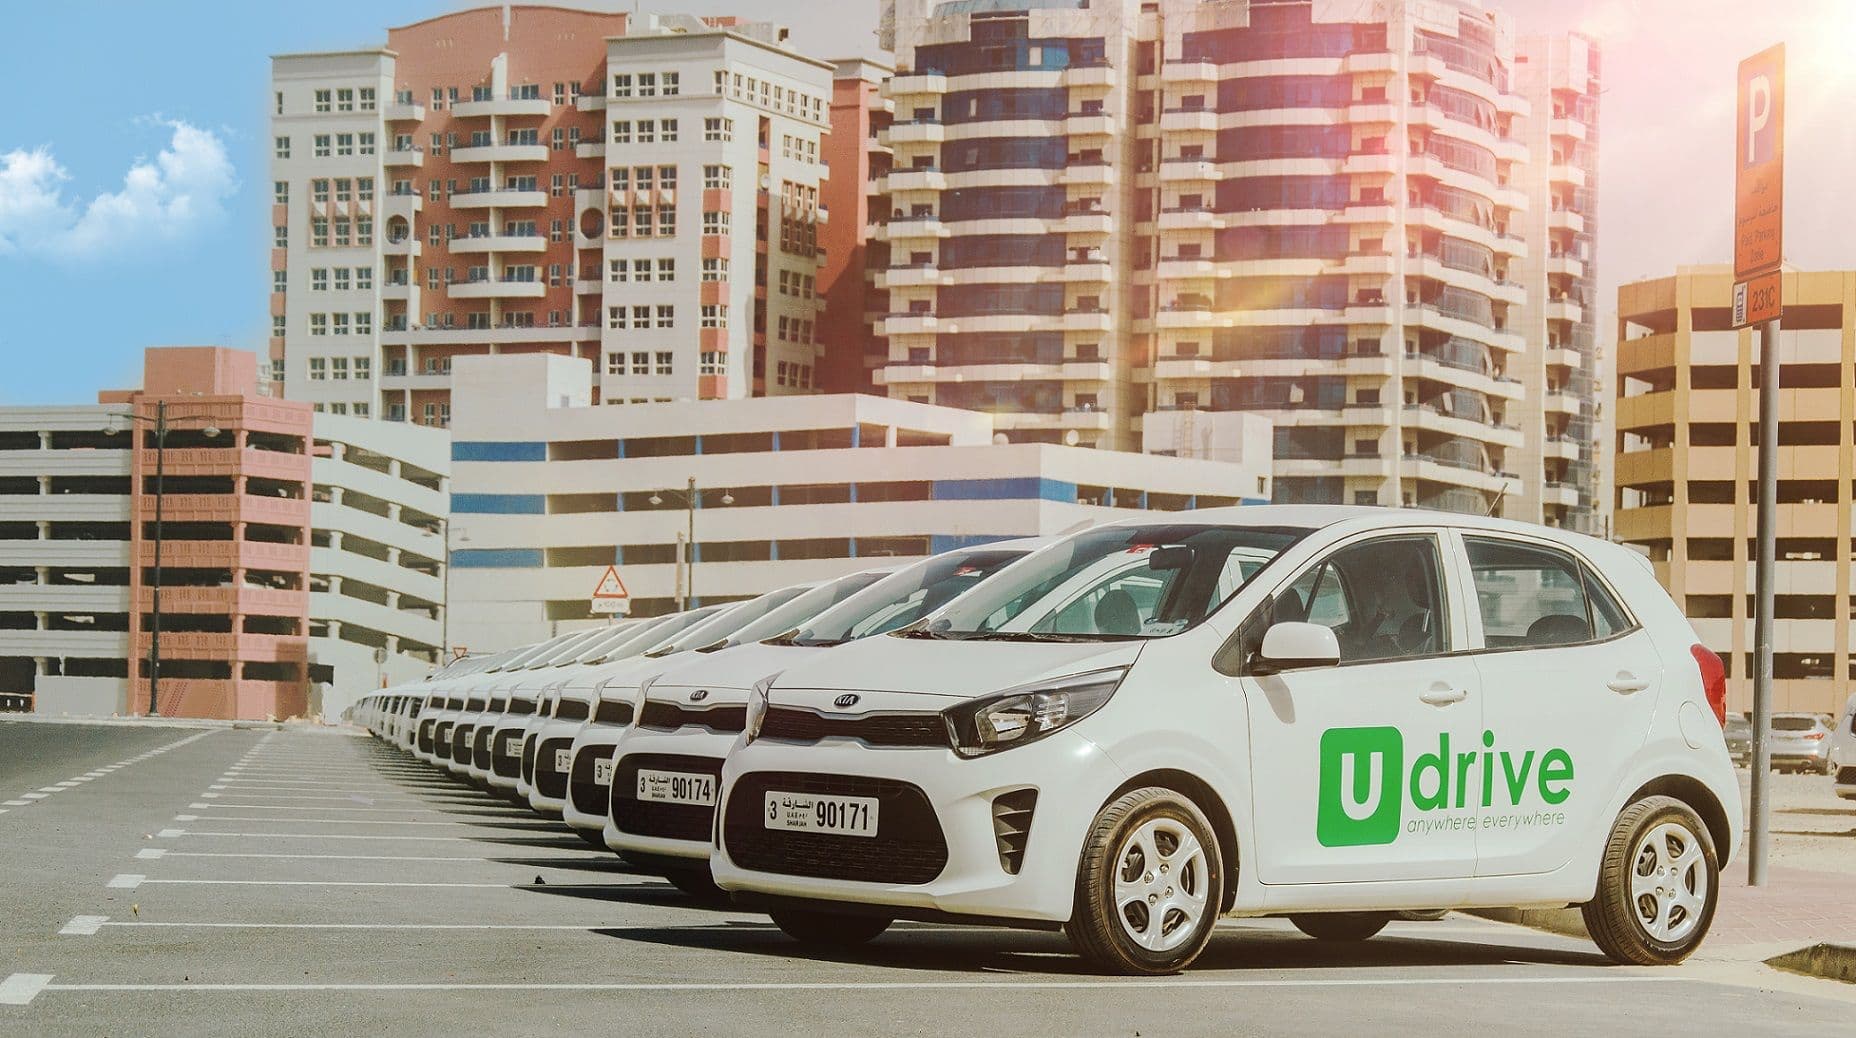 Dubai-Based Udrive to Provide Services in Saudi Arabia